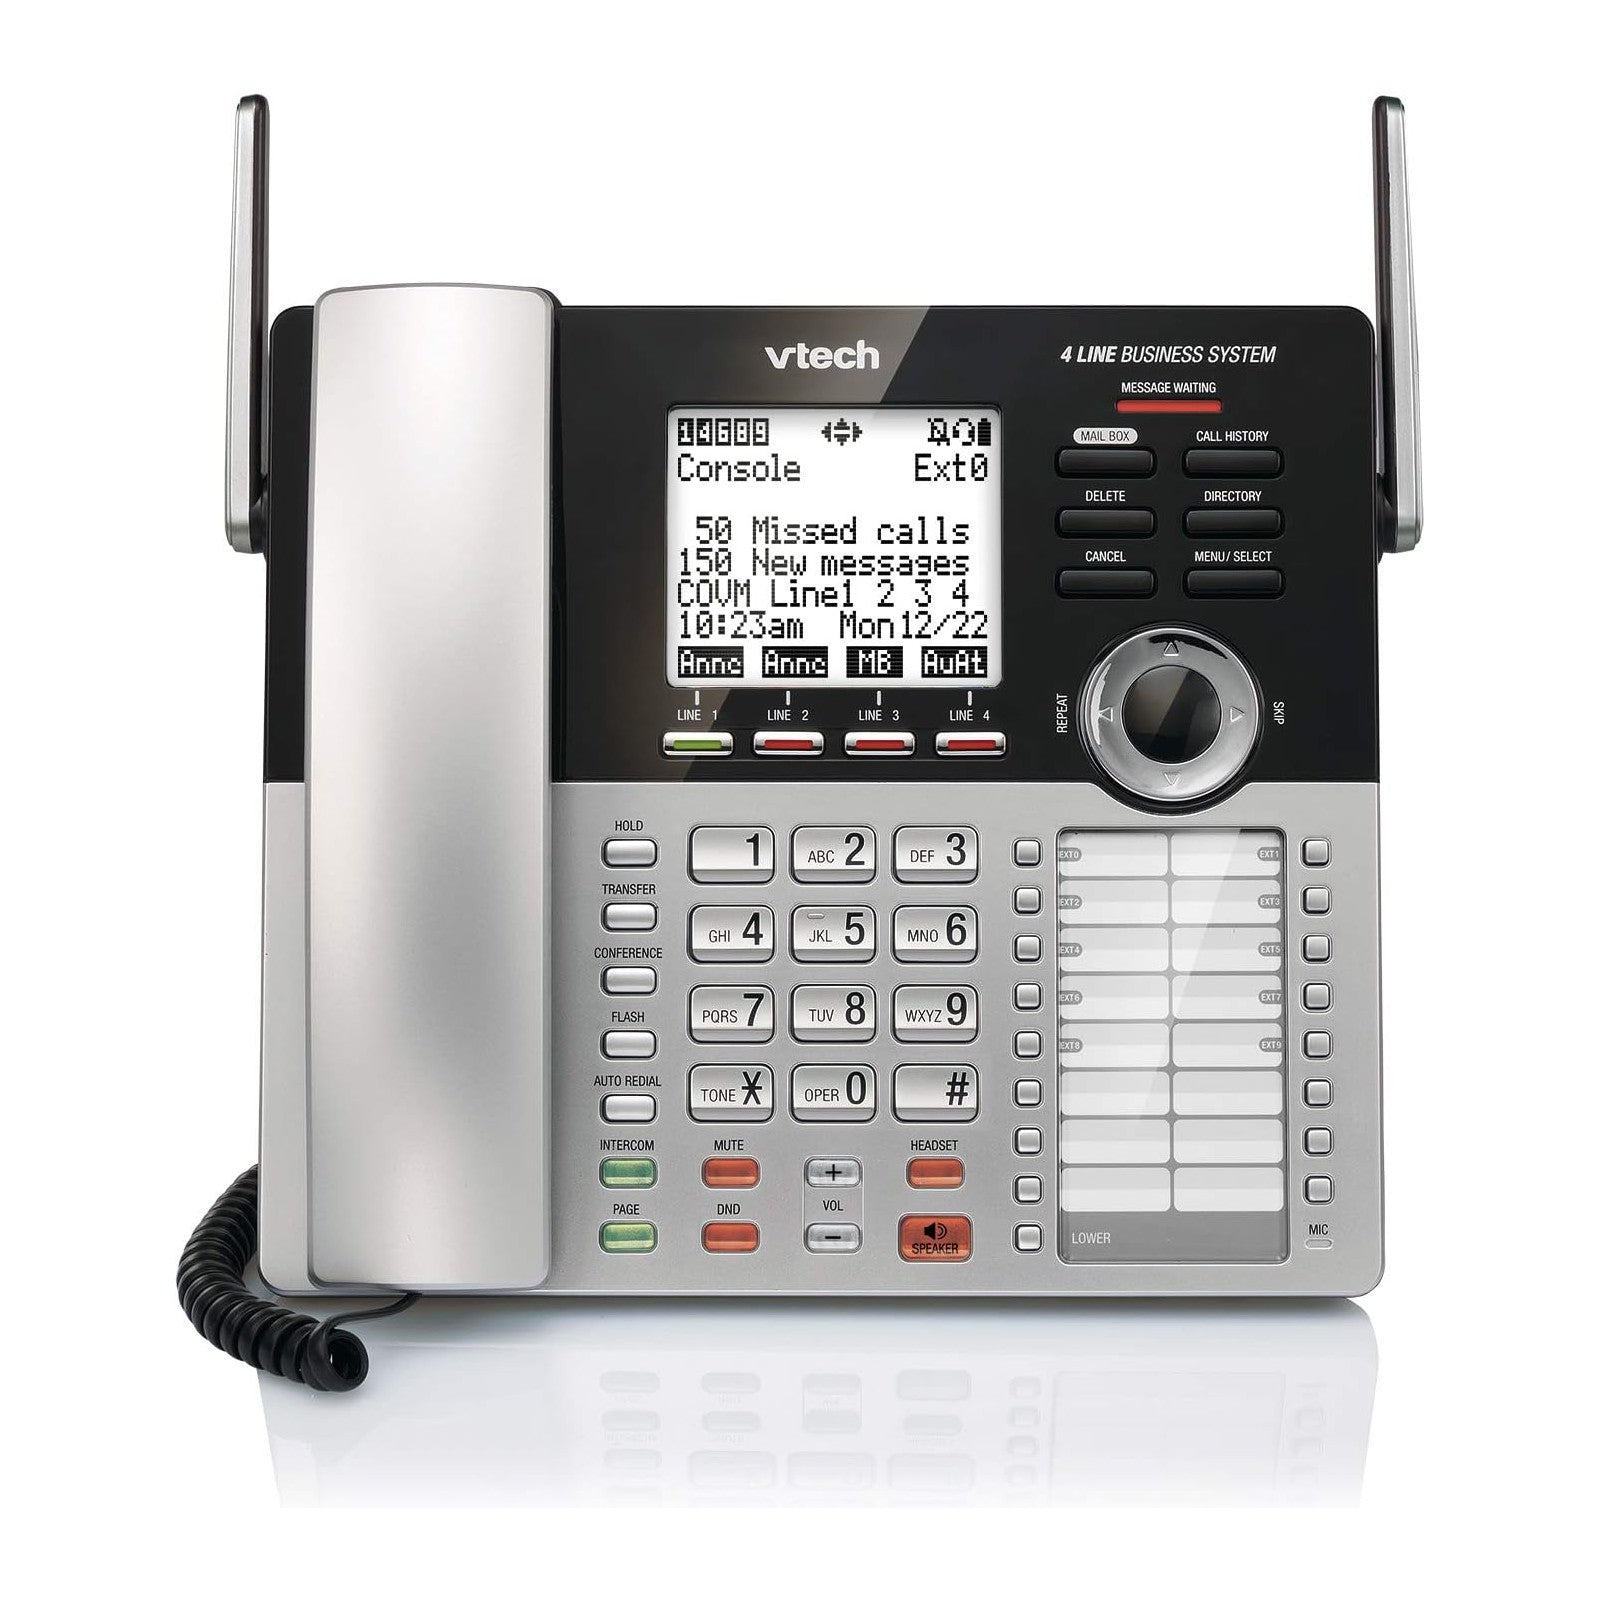 VTECS6949 - VTech CS6949 DECT 6.0 Standard Phone - Black, Silver